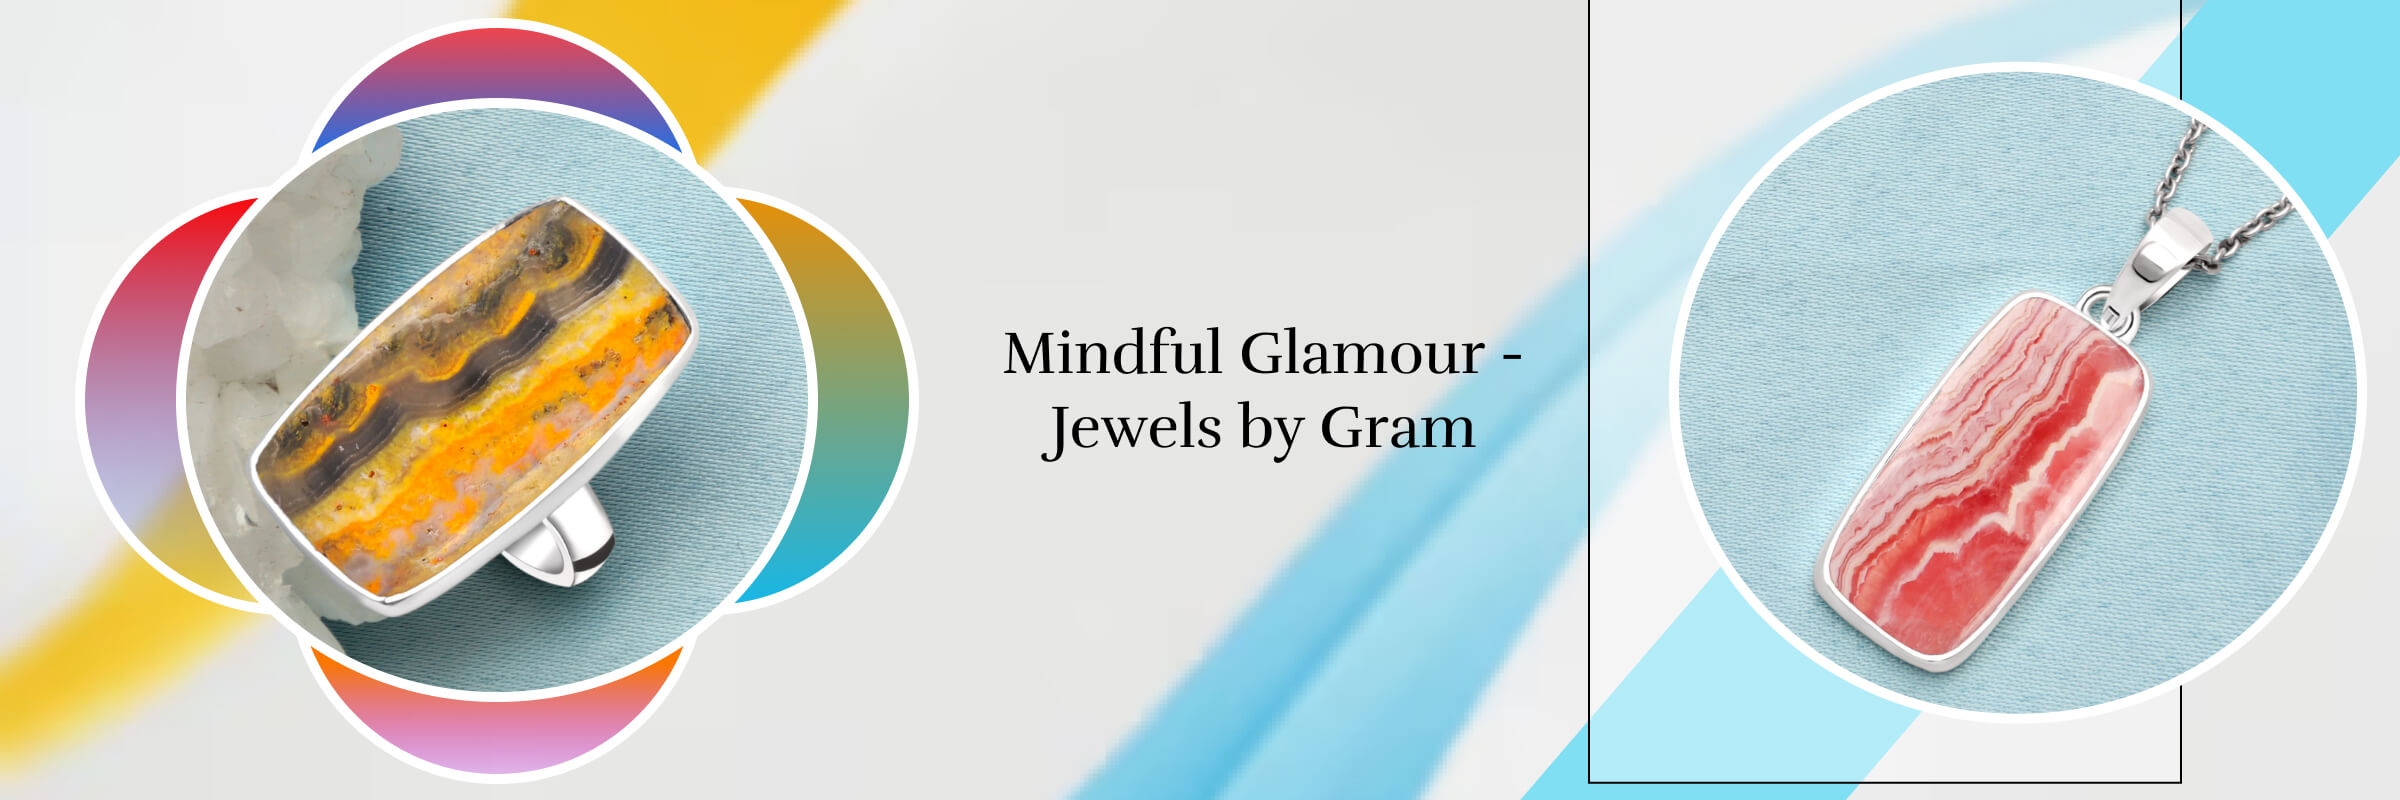 Buy Jewelry in Gram